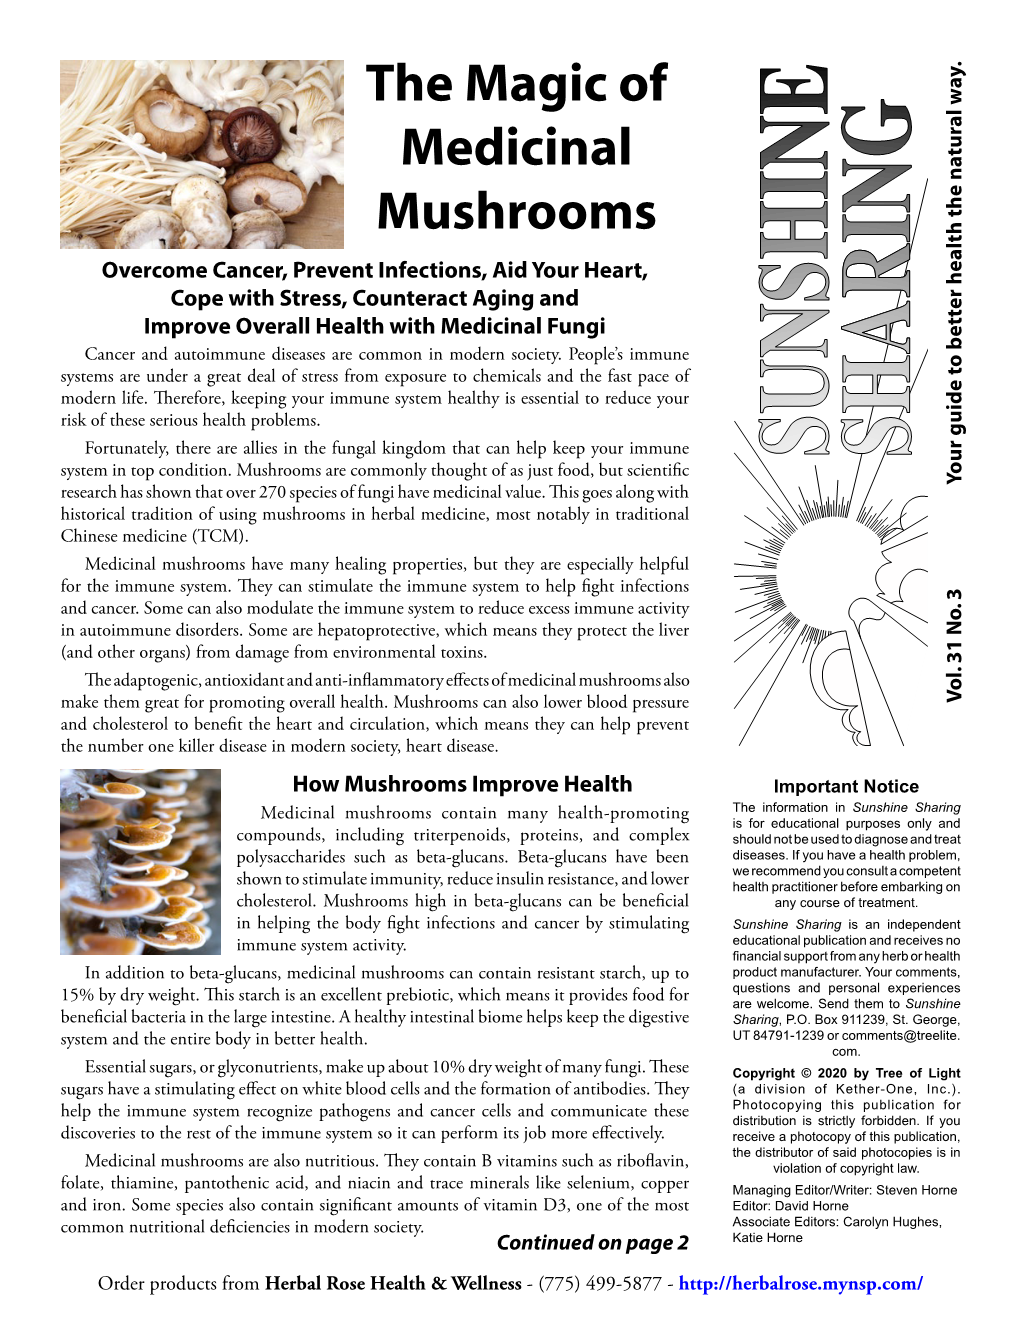 The Magic of Medicinal Mushrooms